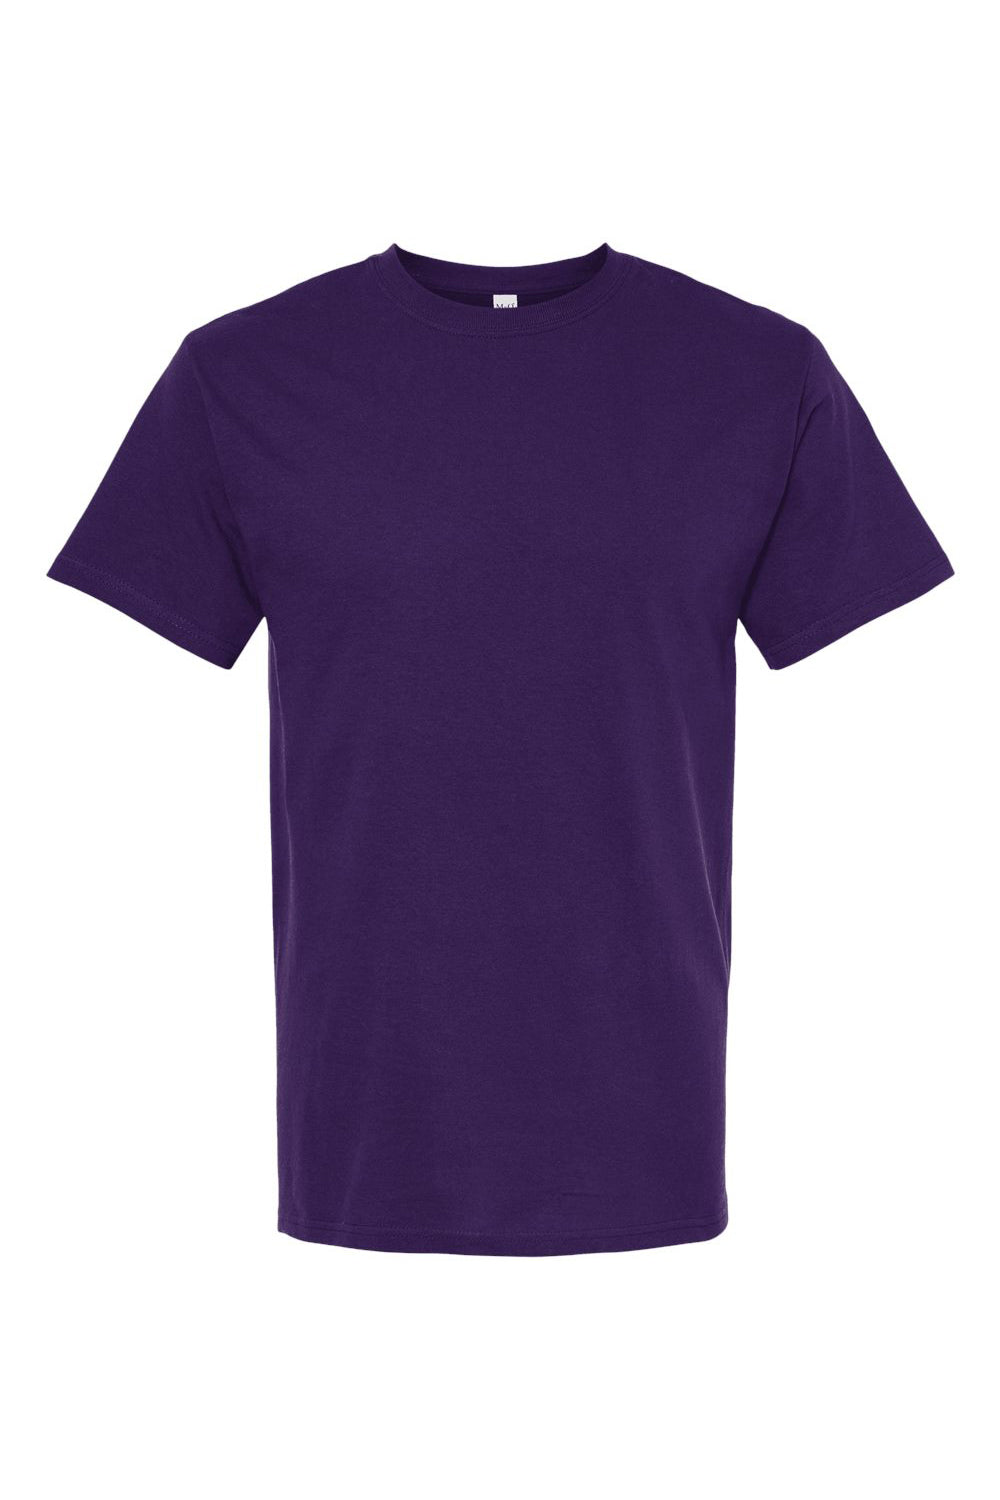 M&O 4800 Mens Gold Soft Touch Short Sleeve Crewneck T-Shirt Purple Flat Front